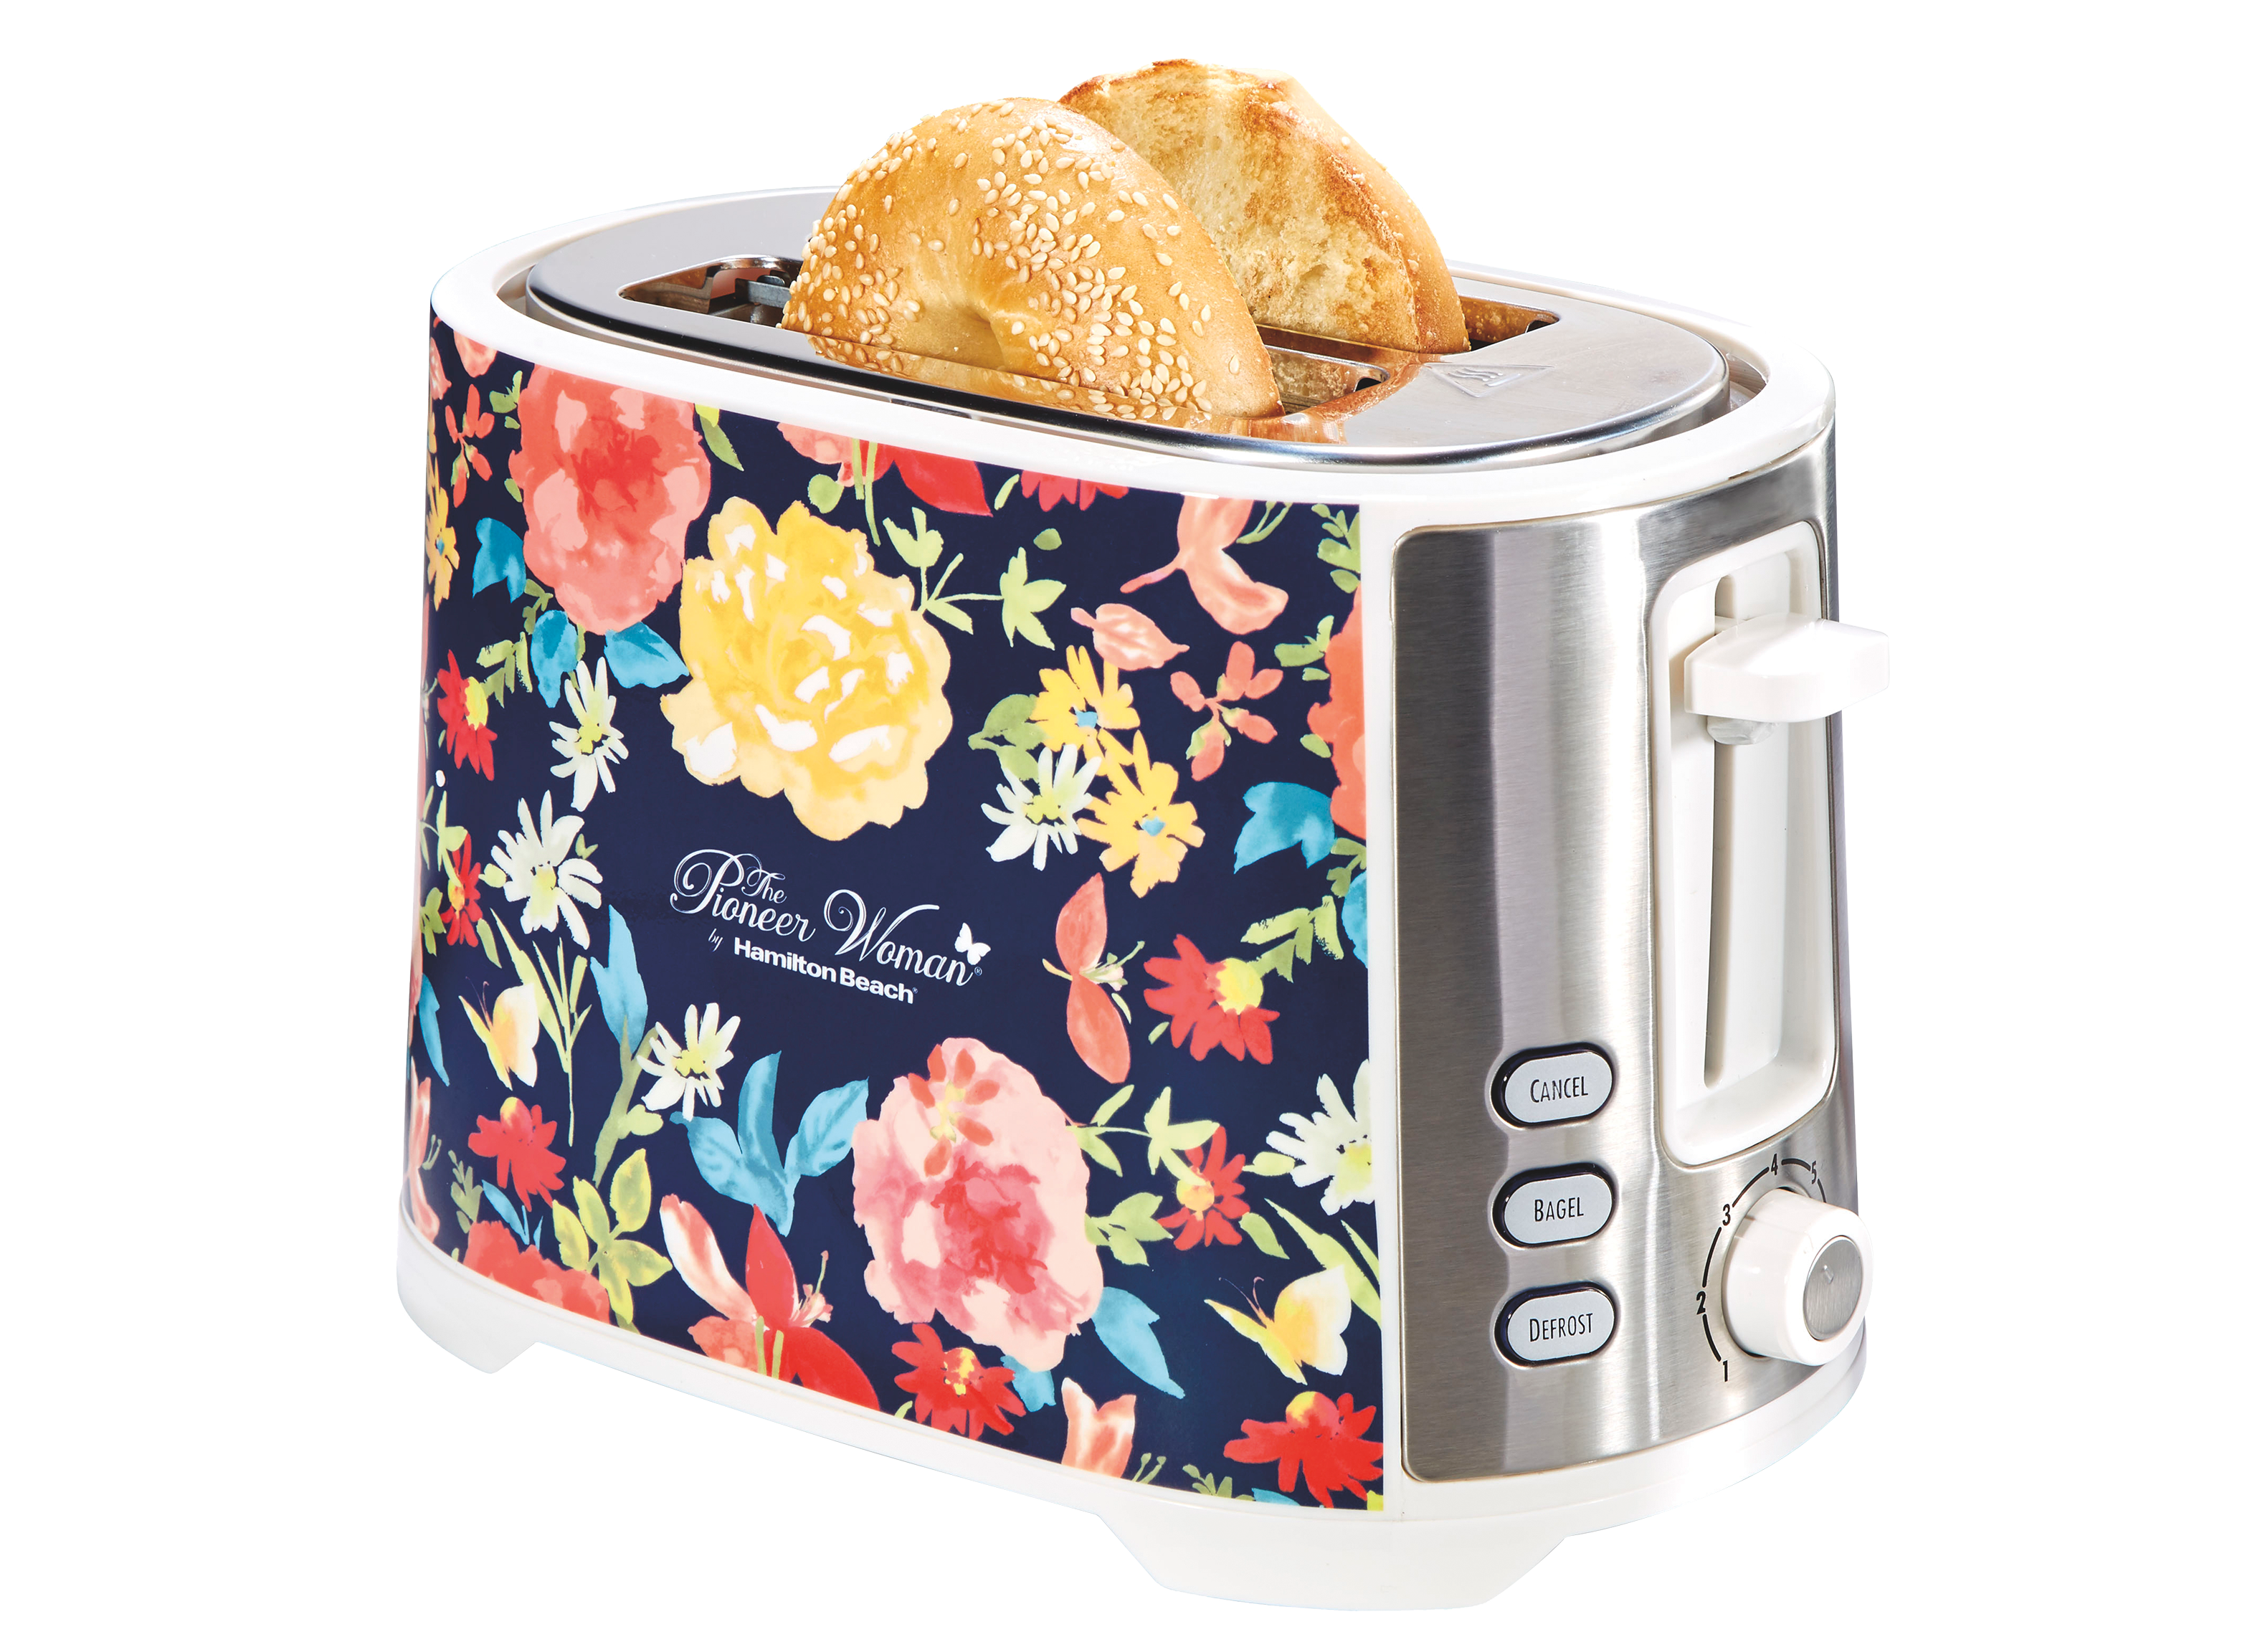 HTF The Pioneer Woman Vintage Floral Toaster 2-slice